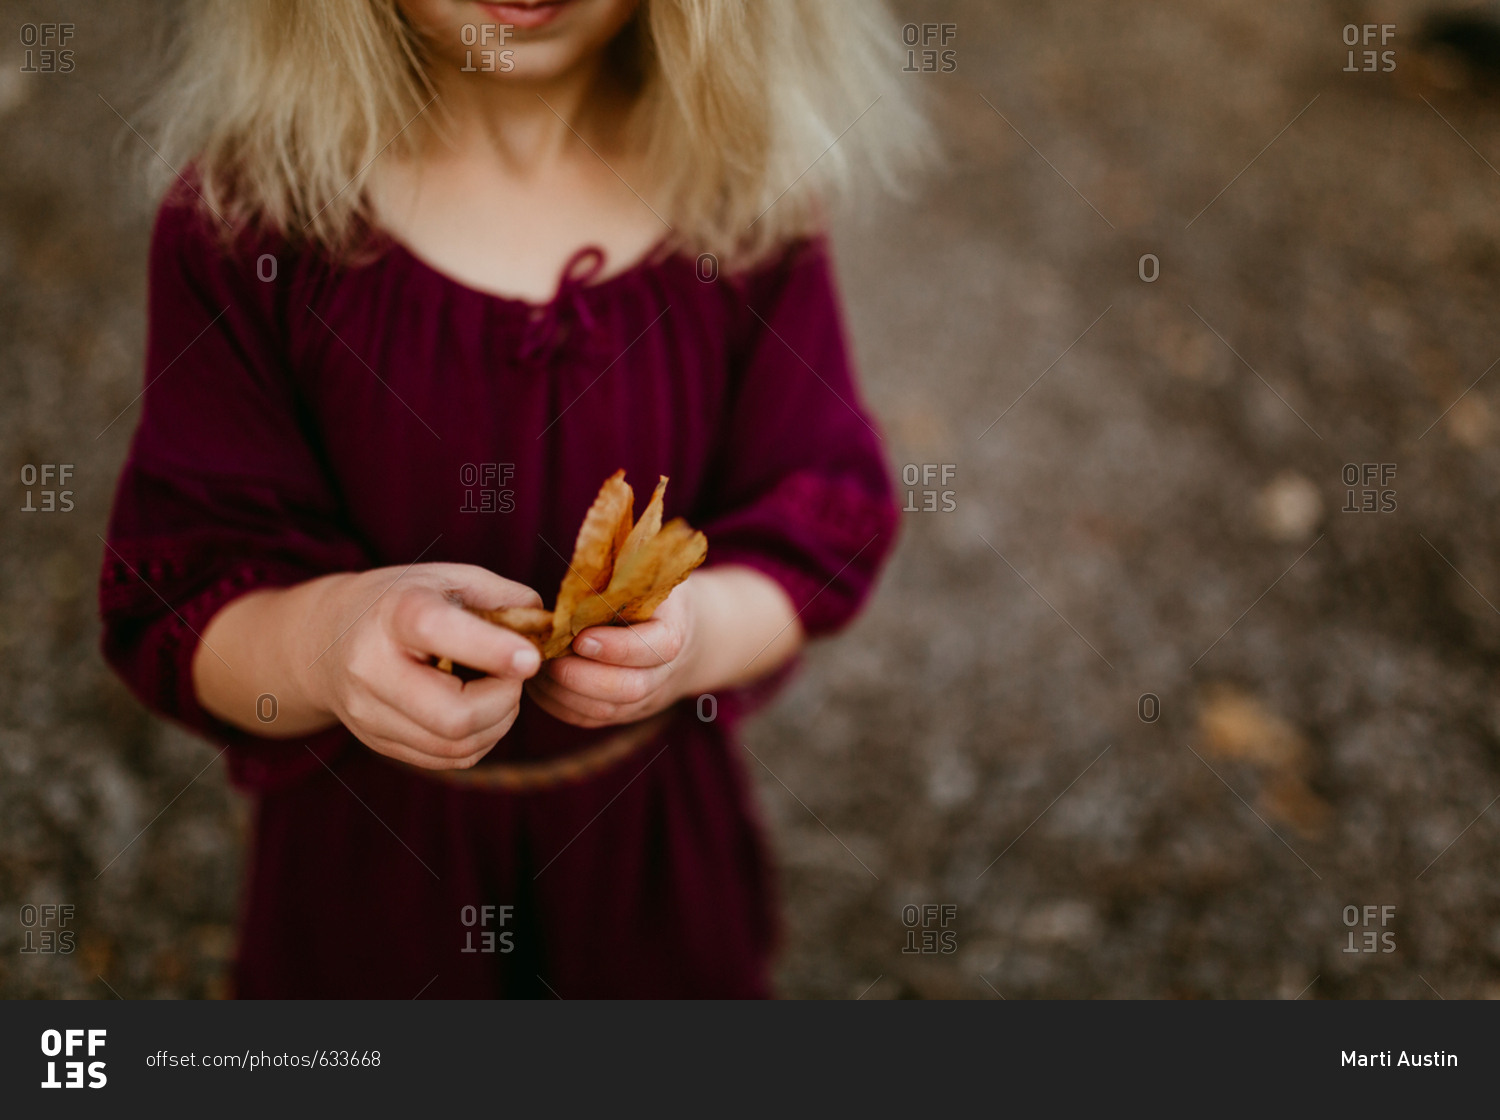 Girl holding a leaf